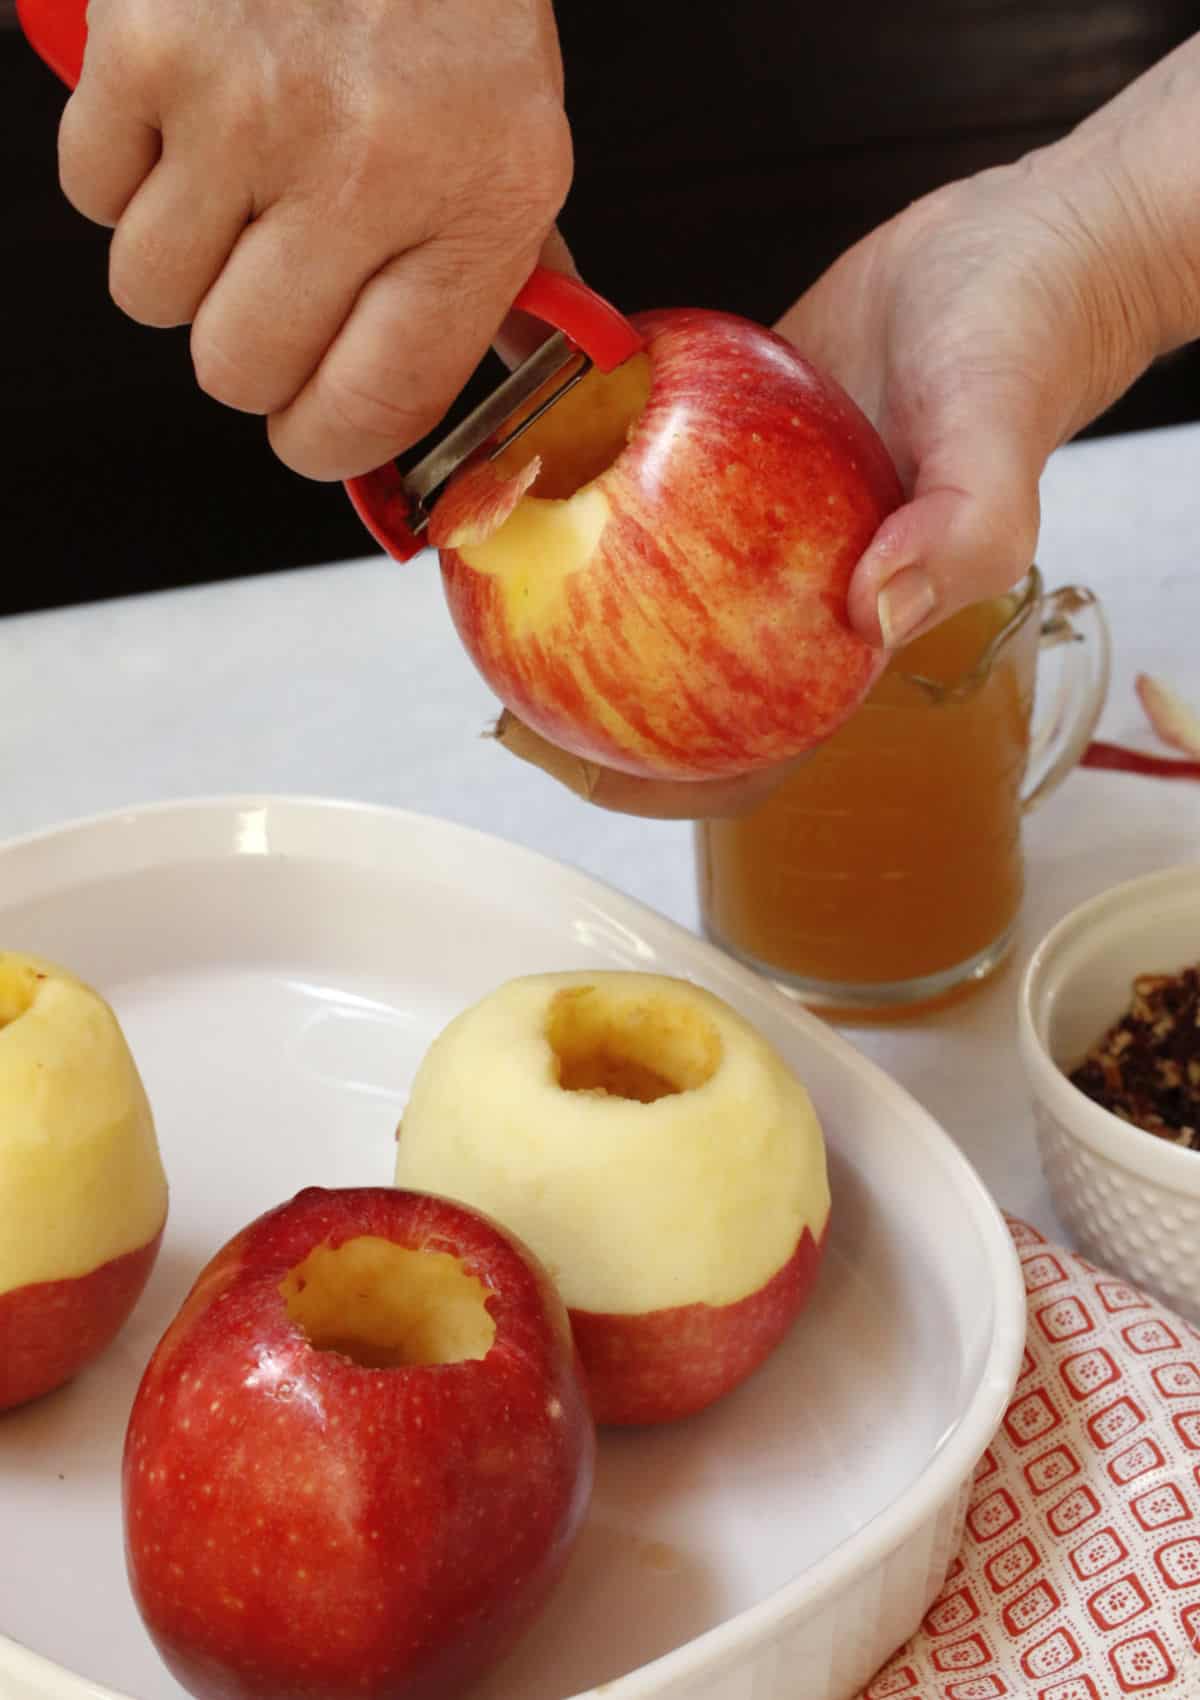 Peeling apples with an apple peeler.